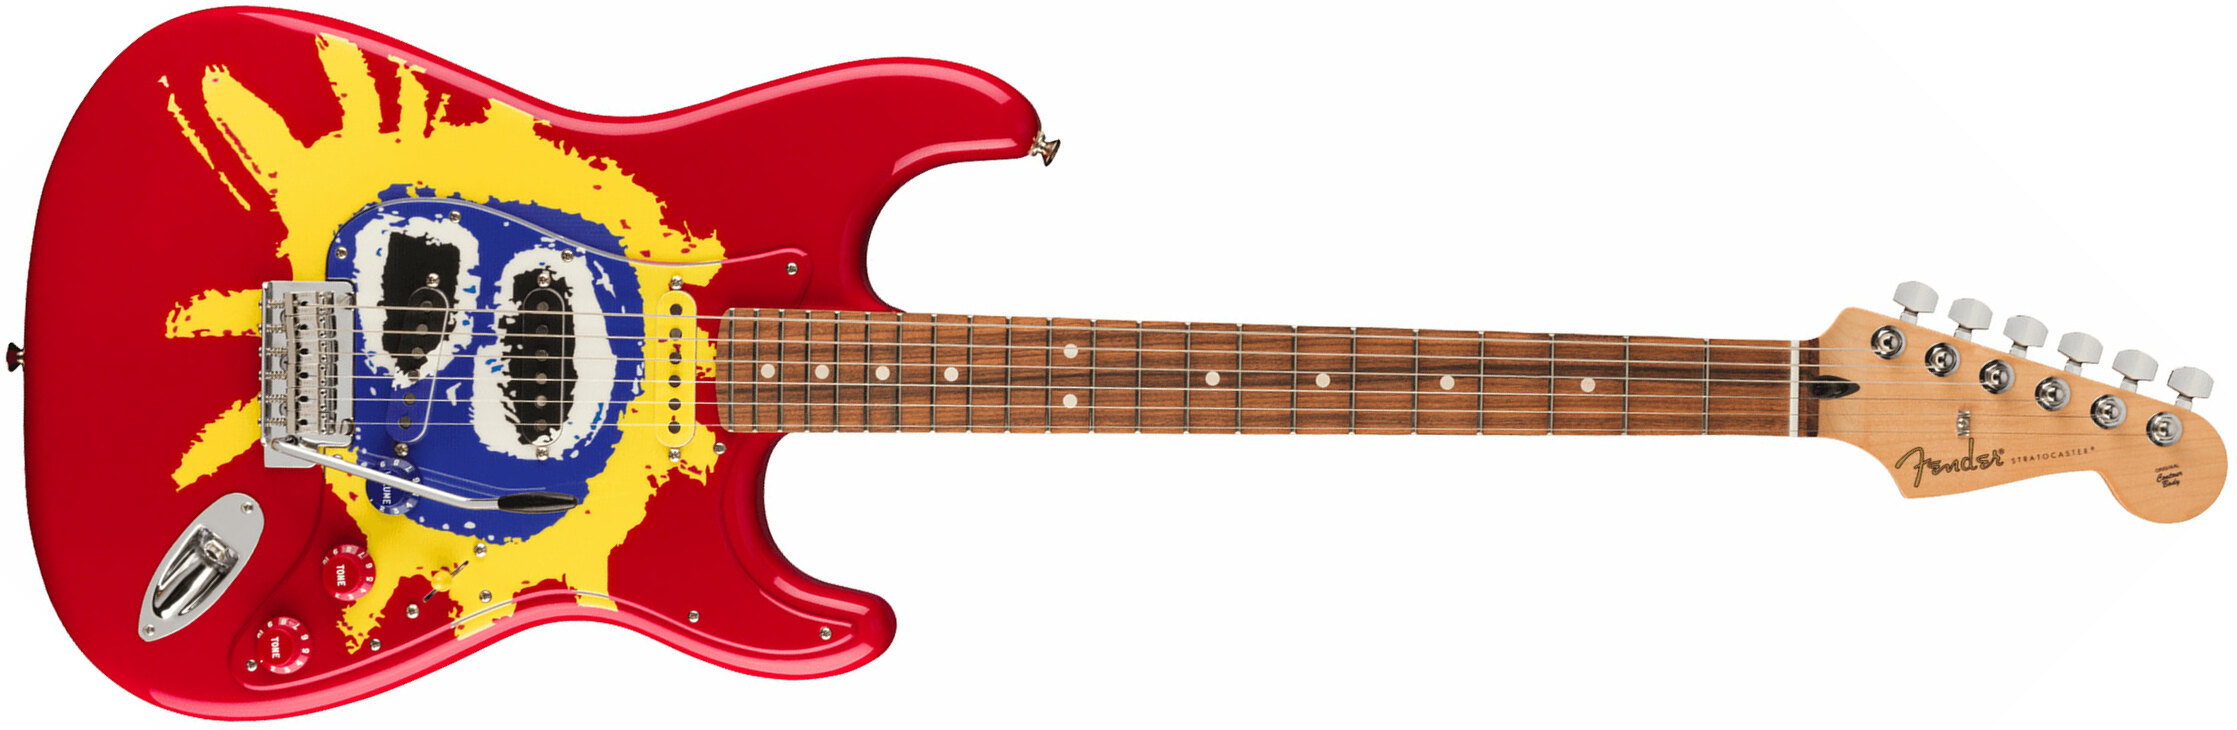 Fender Strat 30th Anniversary Screamadelica Ltd Mex 3s Trem Pf - Red Blue Yellow - E-Gitarre in Str-Form - Main picture